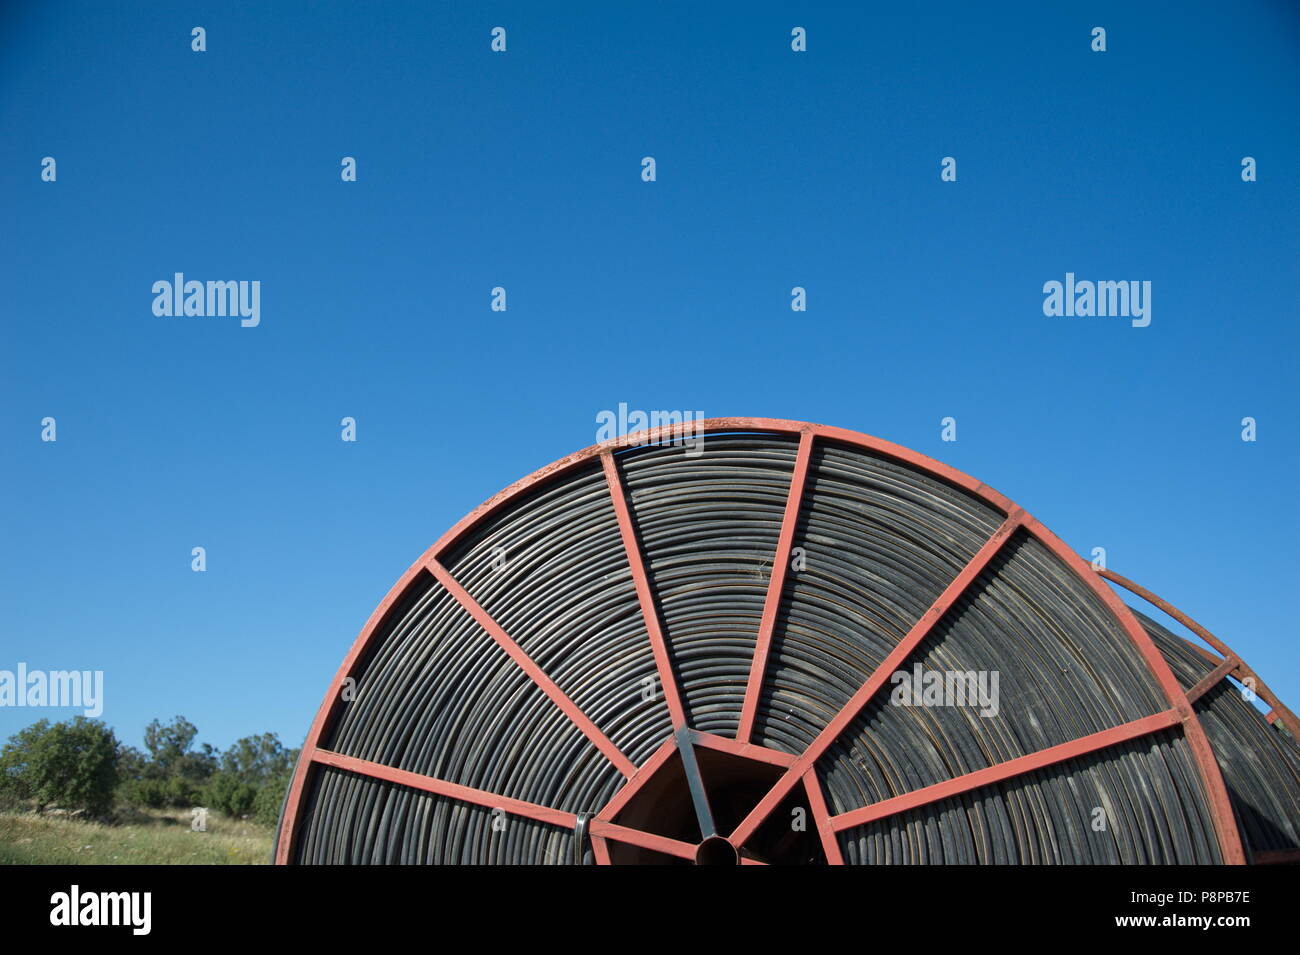 irrigation pipe wheel Stock Photo